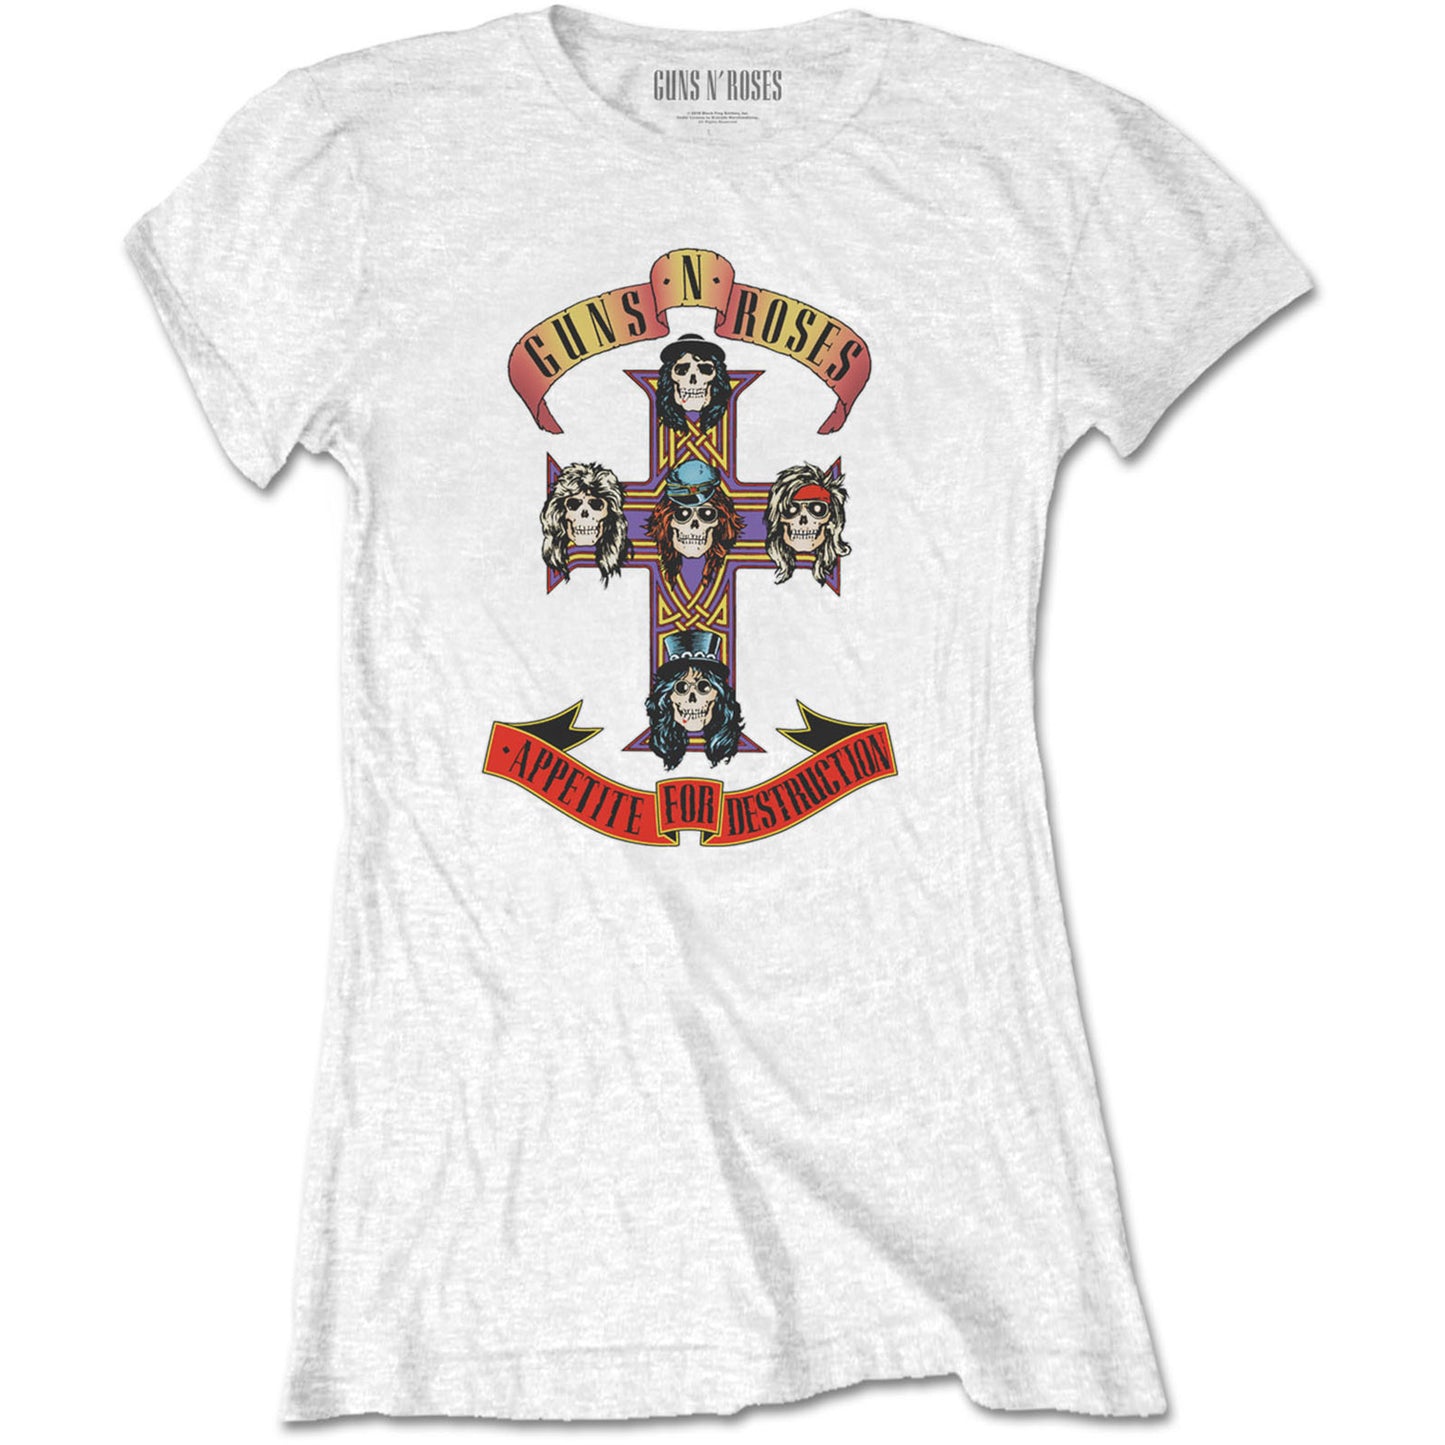 Guns N' Roses Ladies T-Shirt: Appetite for Destruction